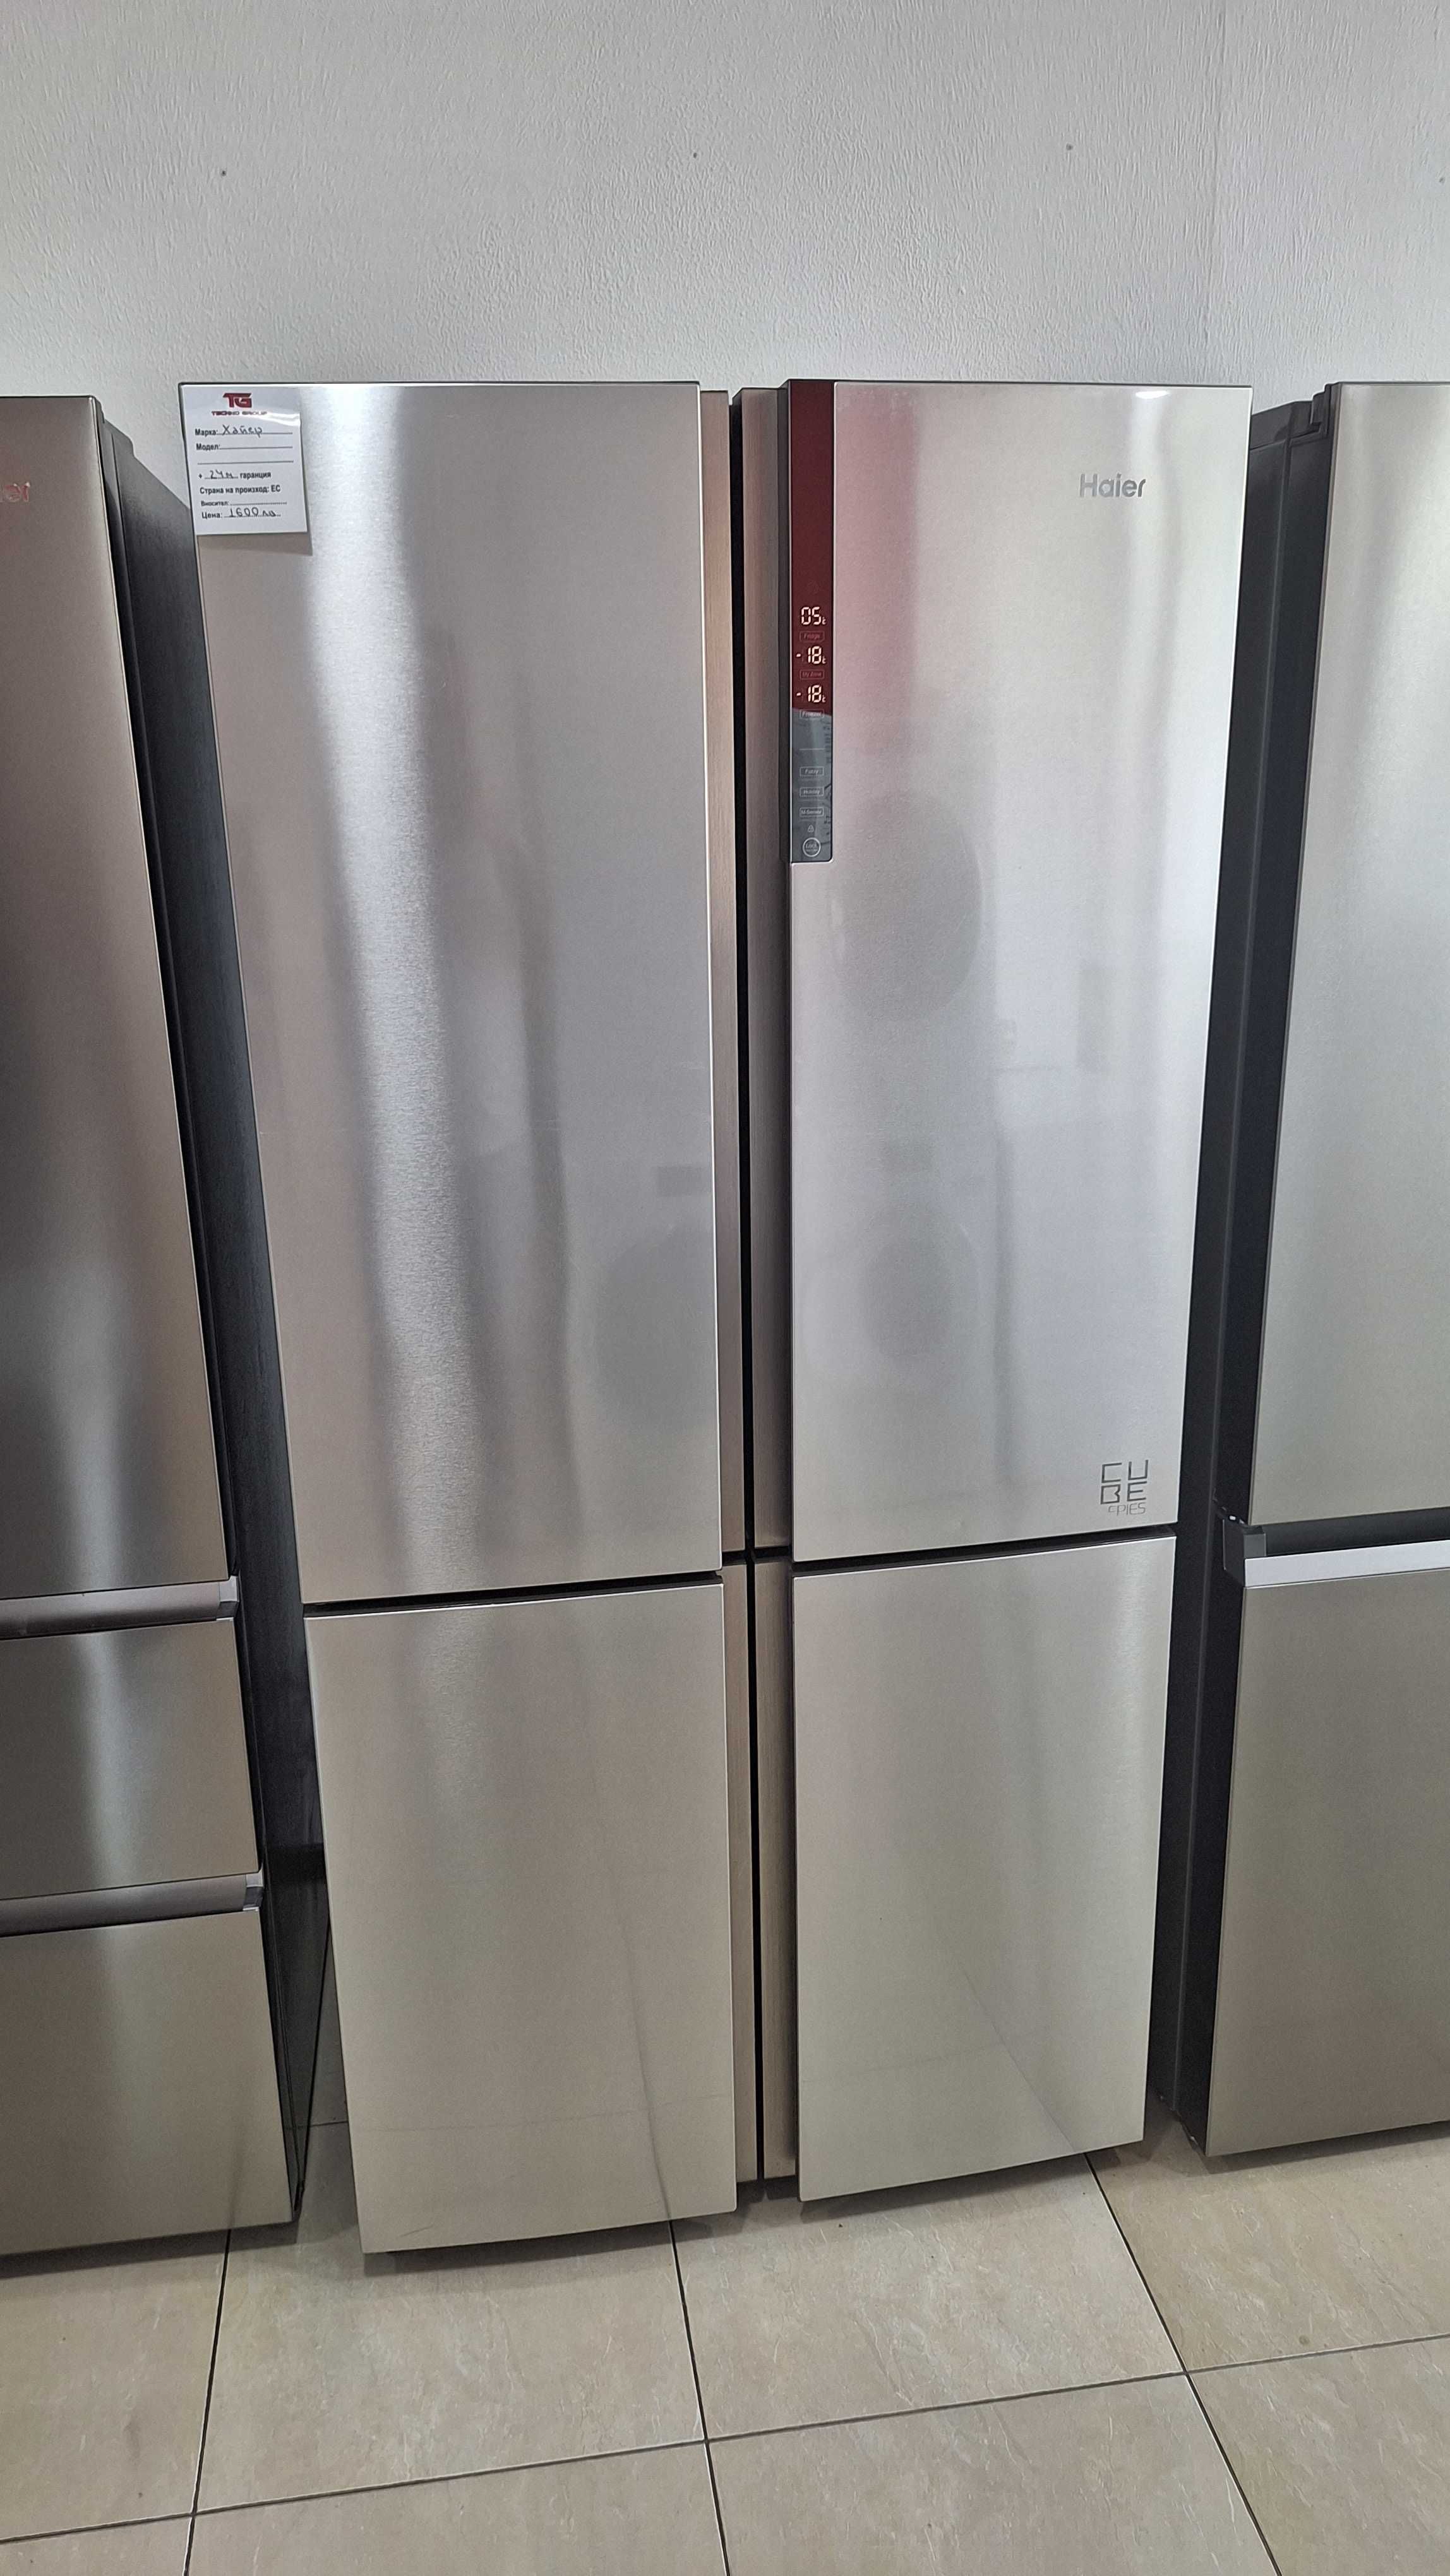 Голям иноксов хладилник с фризер Хайер- 24м гаранция